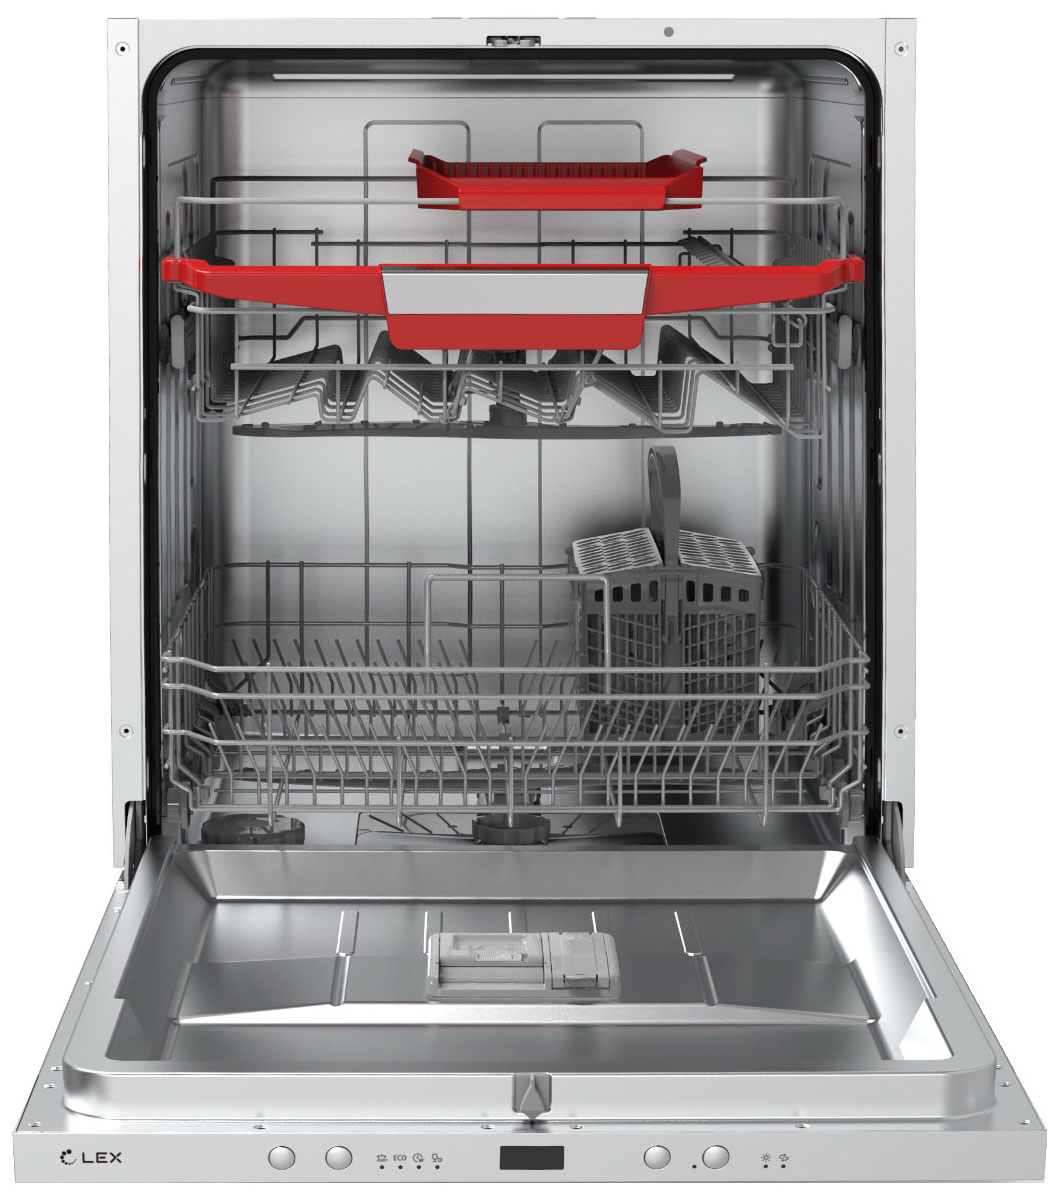 Встраиваемая посудомоечная машина LEX PM 6043 B посудомоечная машина встраиваемая lex pm 4562 b